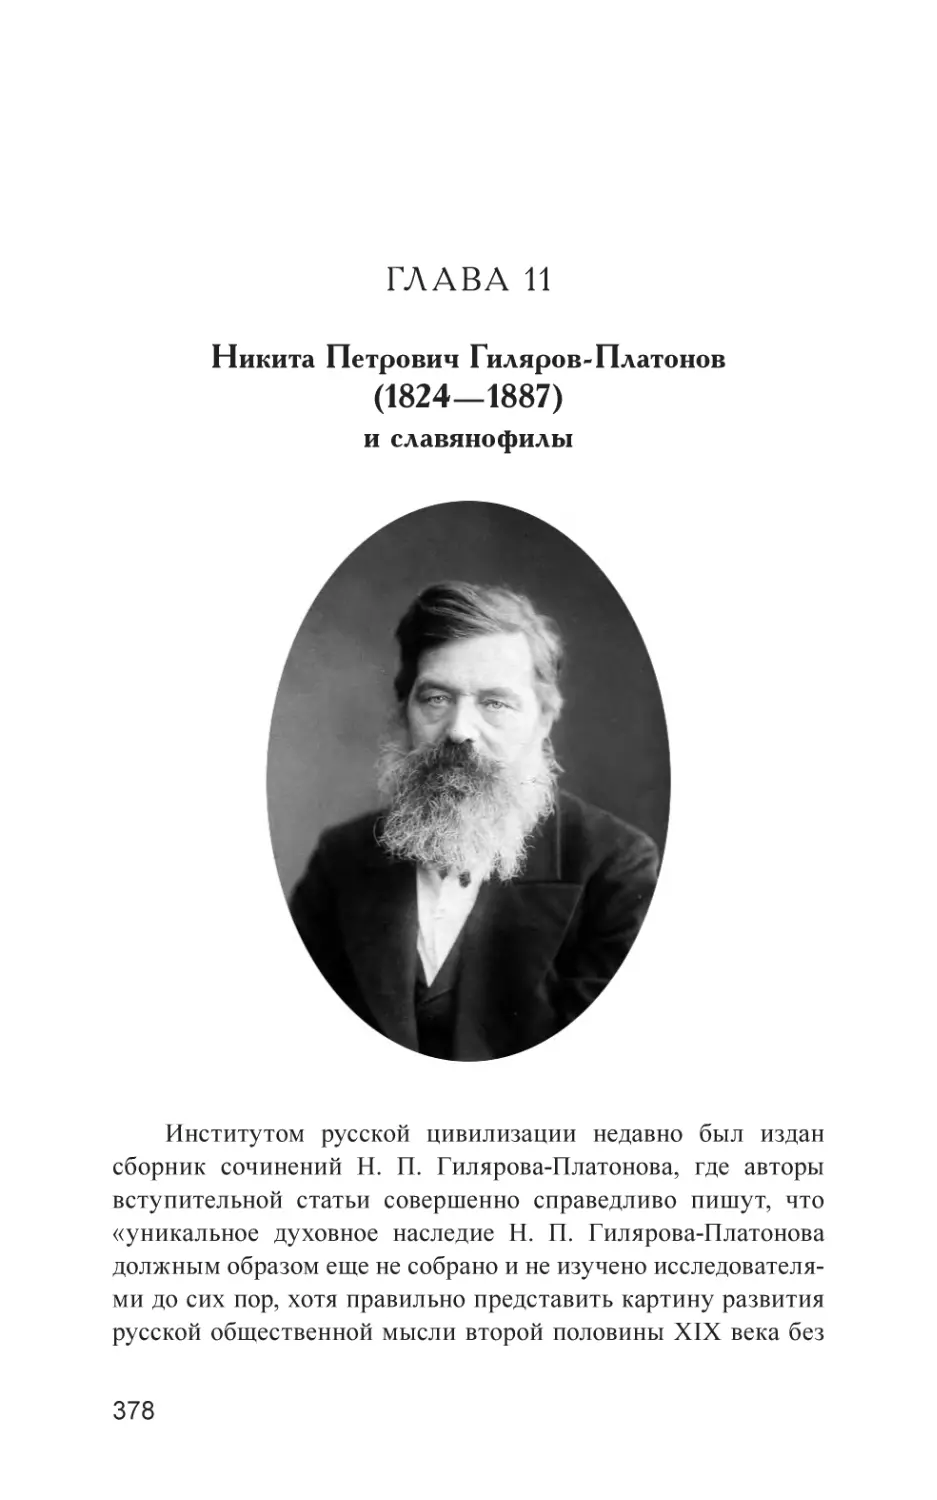 Глава 11
Никита Петрович Гиляров-Платонов (1824—1887) и славянофилы